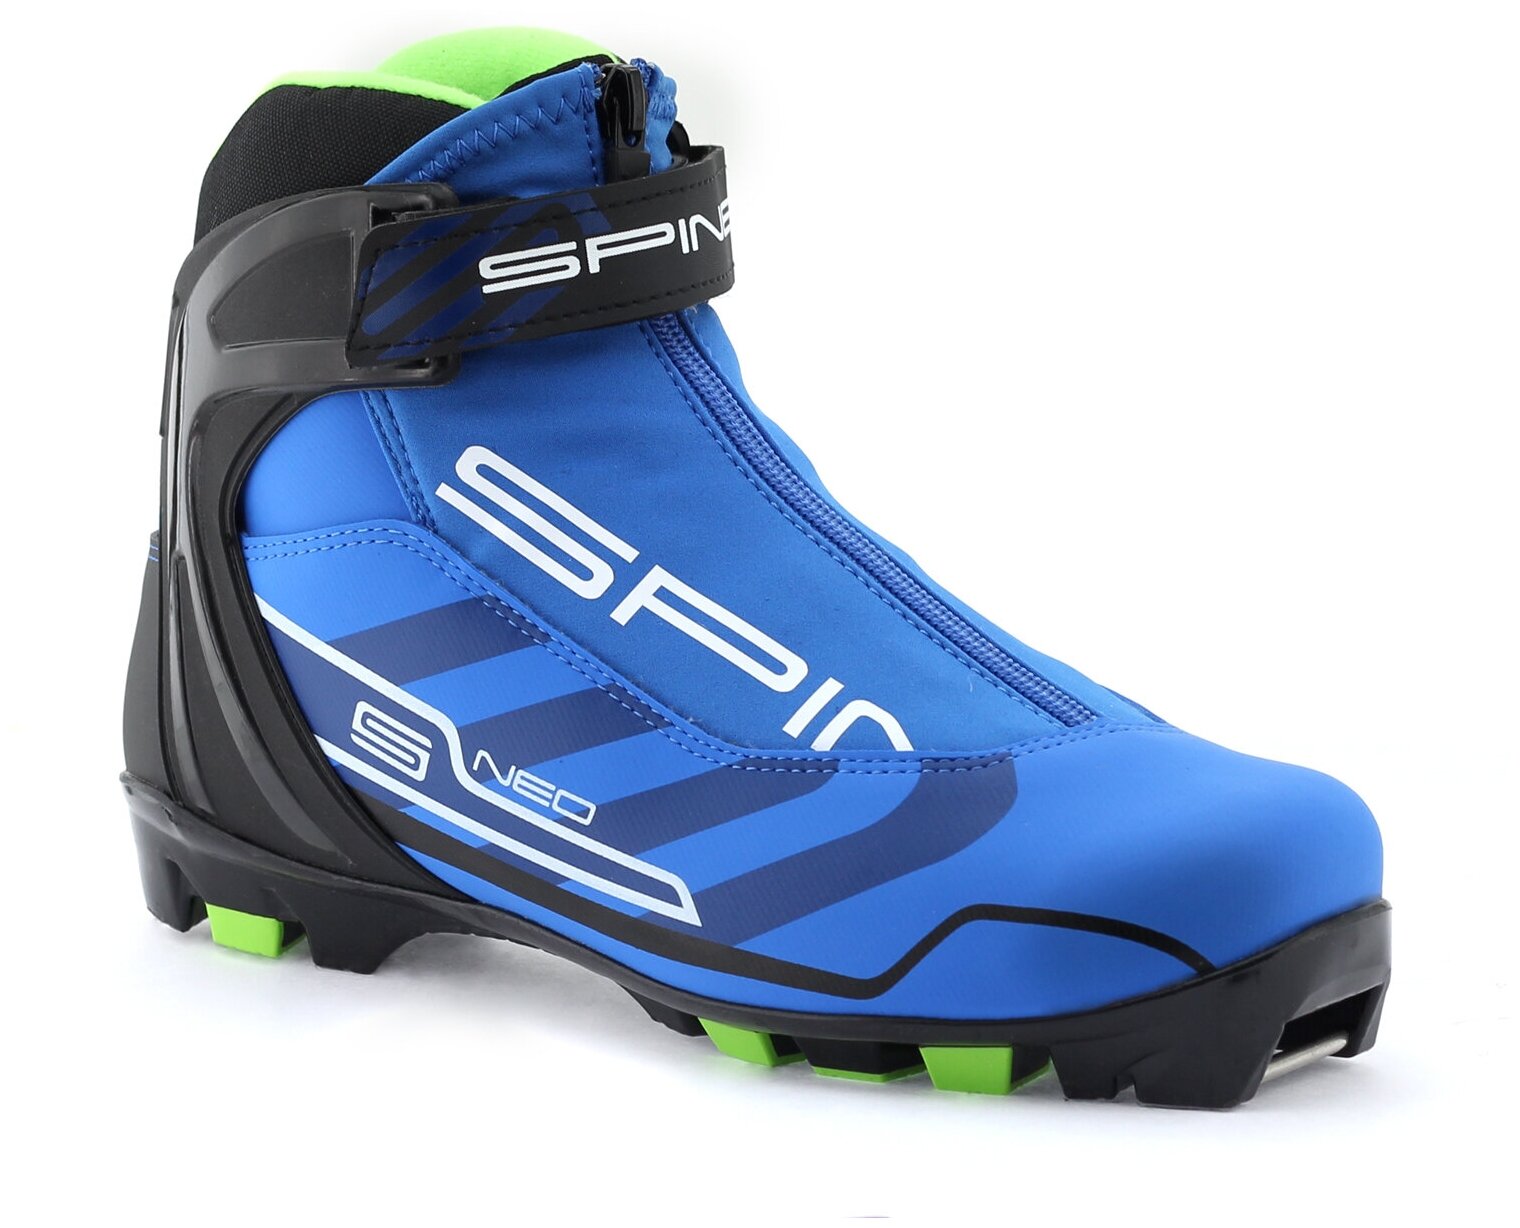 Ботинки лыжные SPINE Neo артикул 161 NNN, размер 42